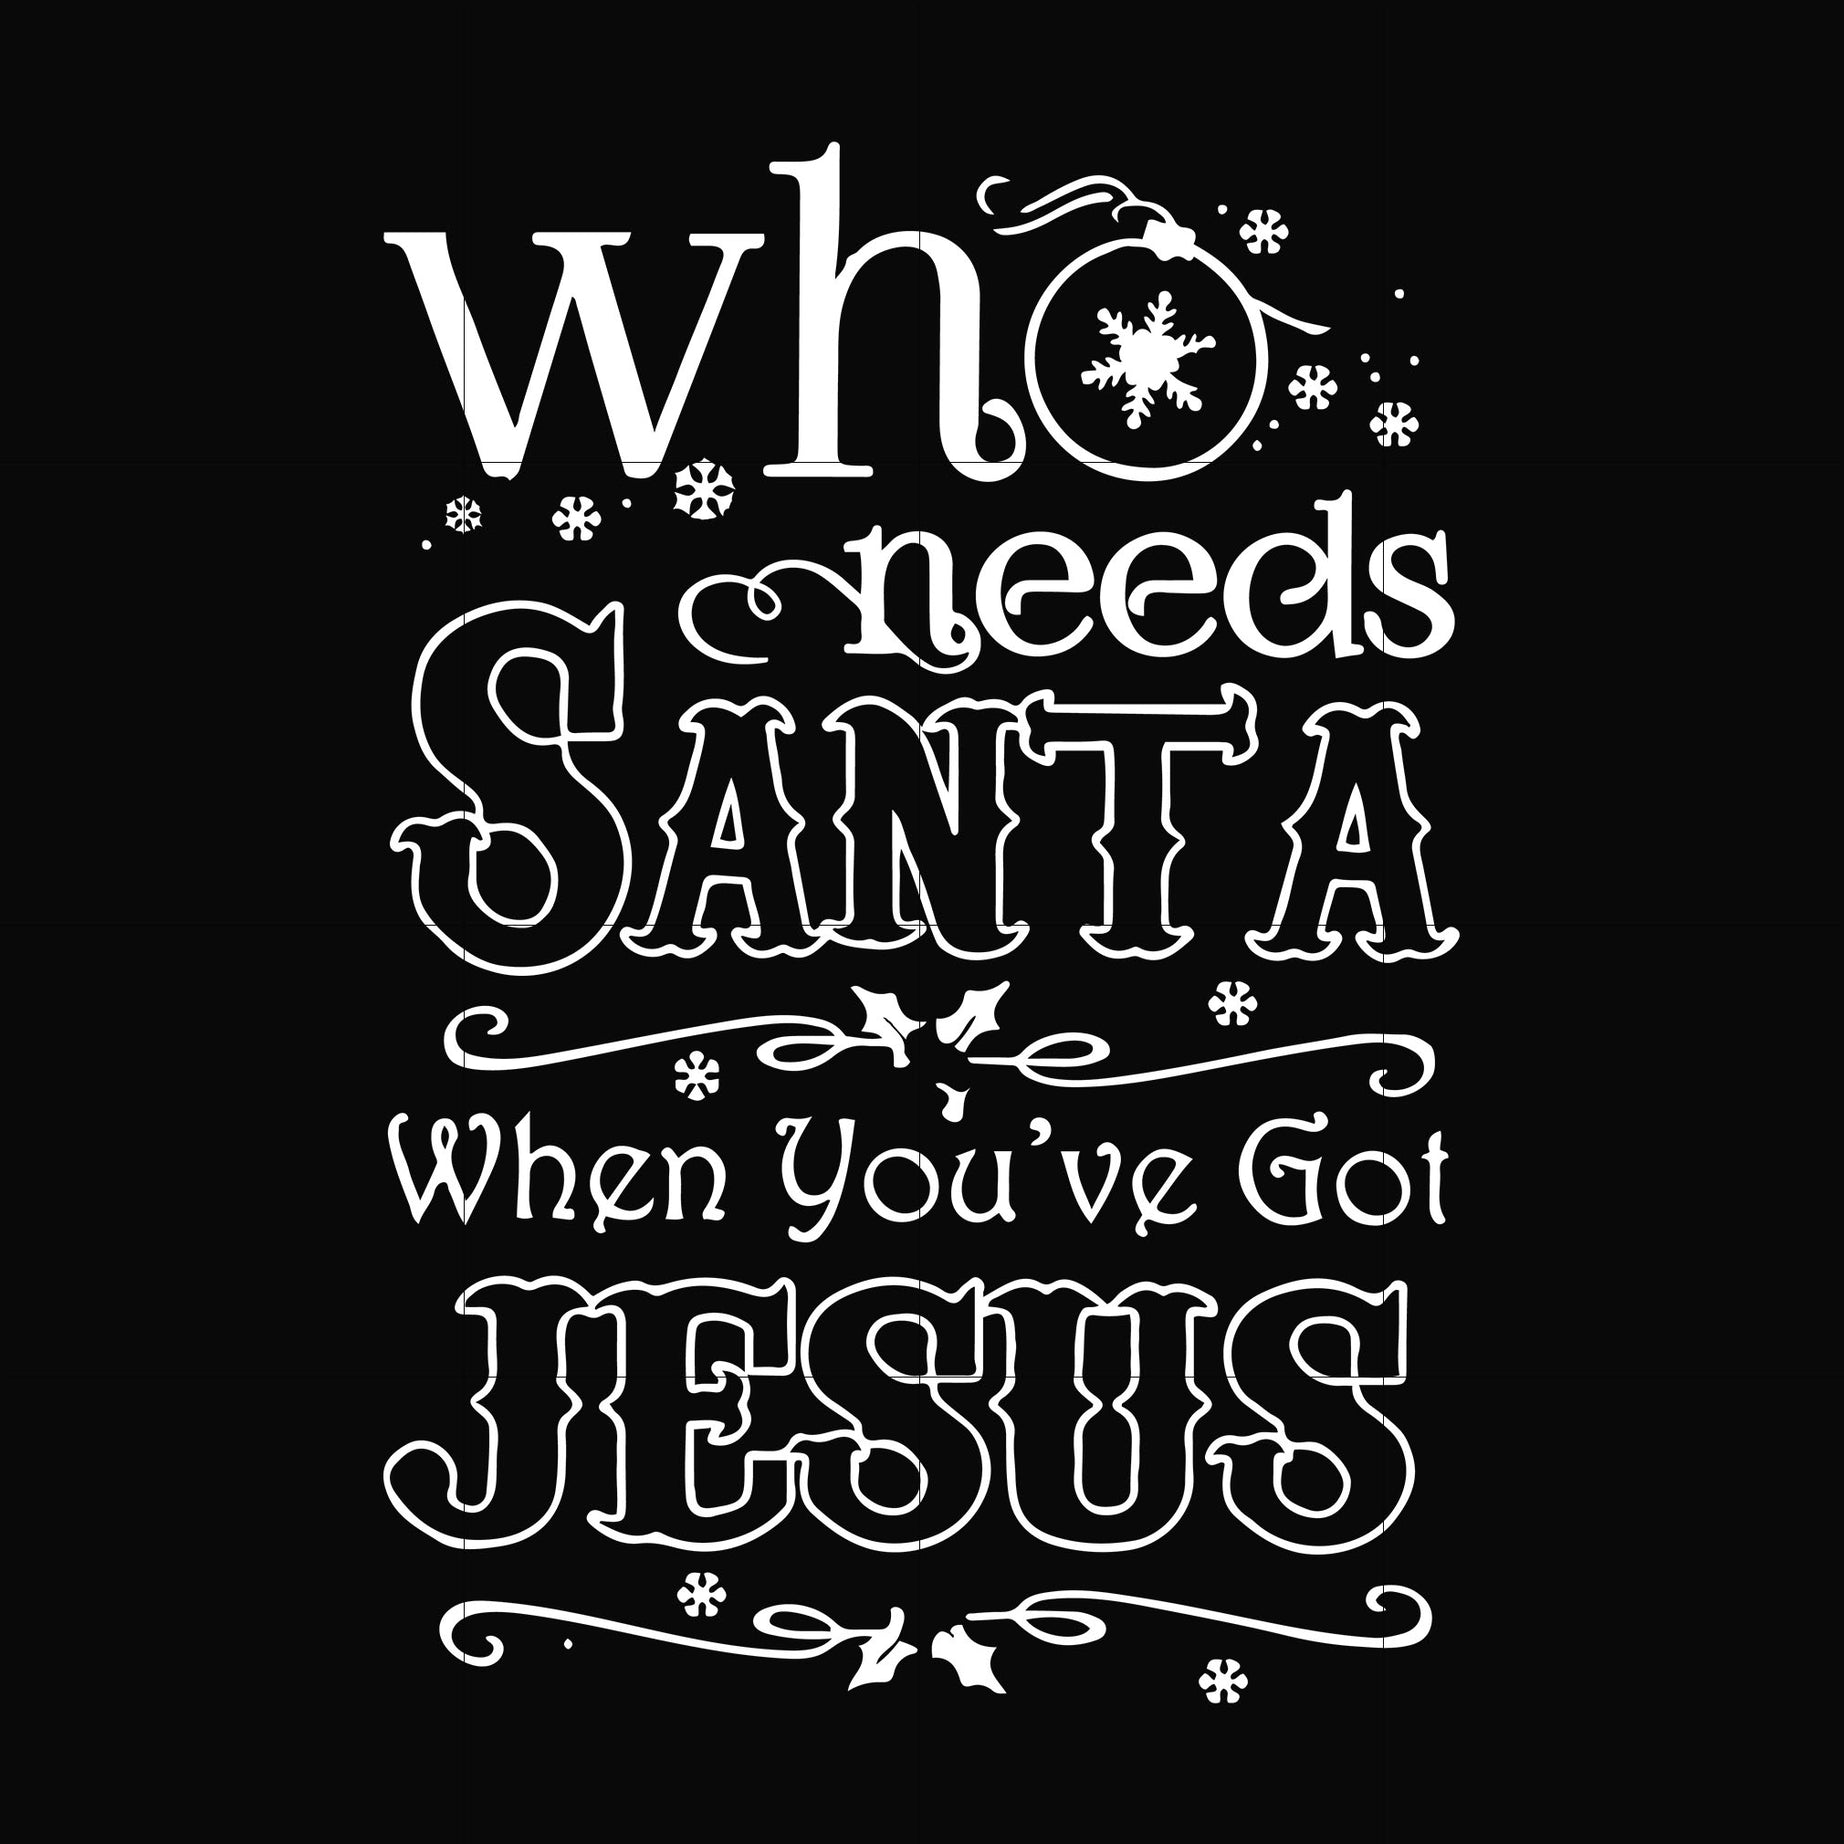 Who needs santa when you have got jesus svg, png, dxf, eps digital file NCRM15072016